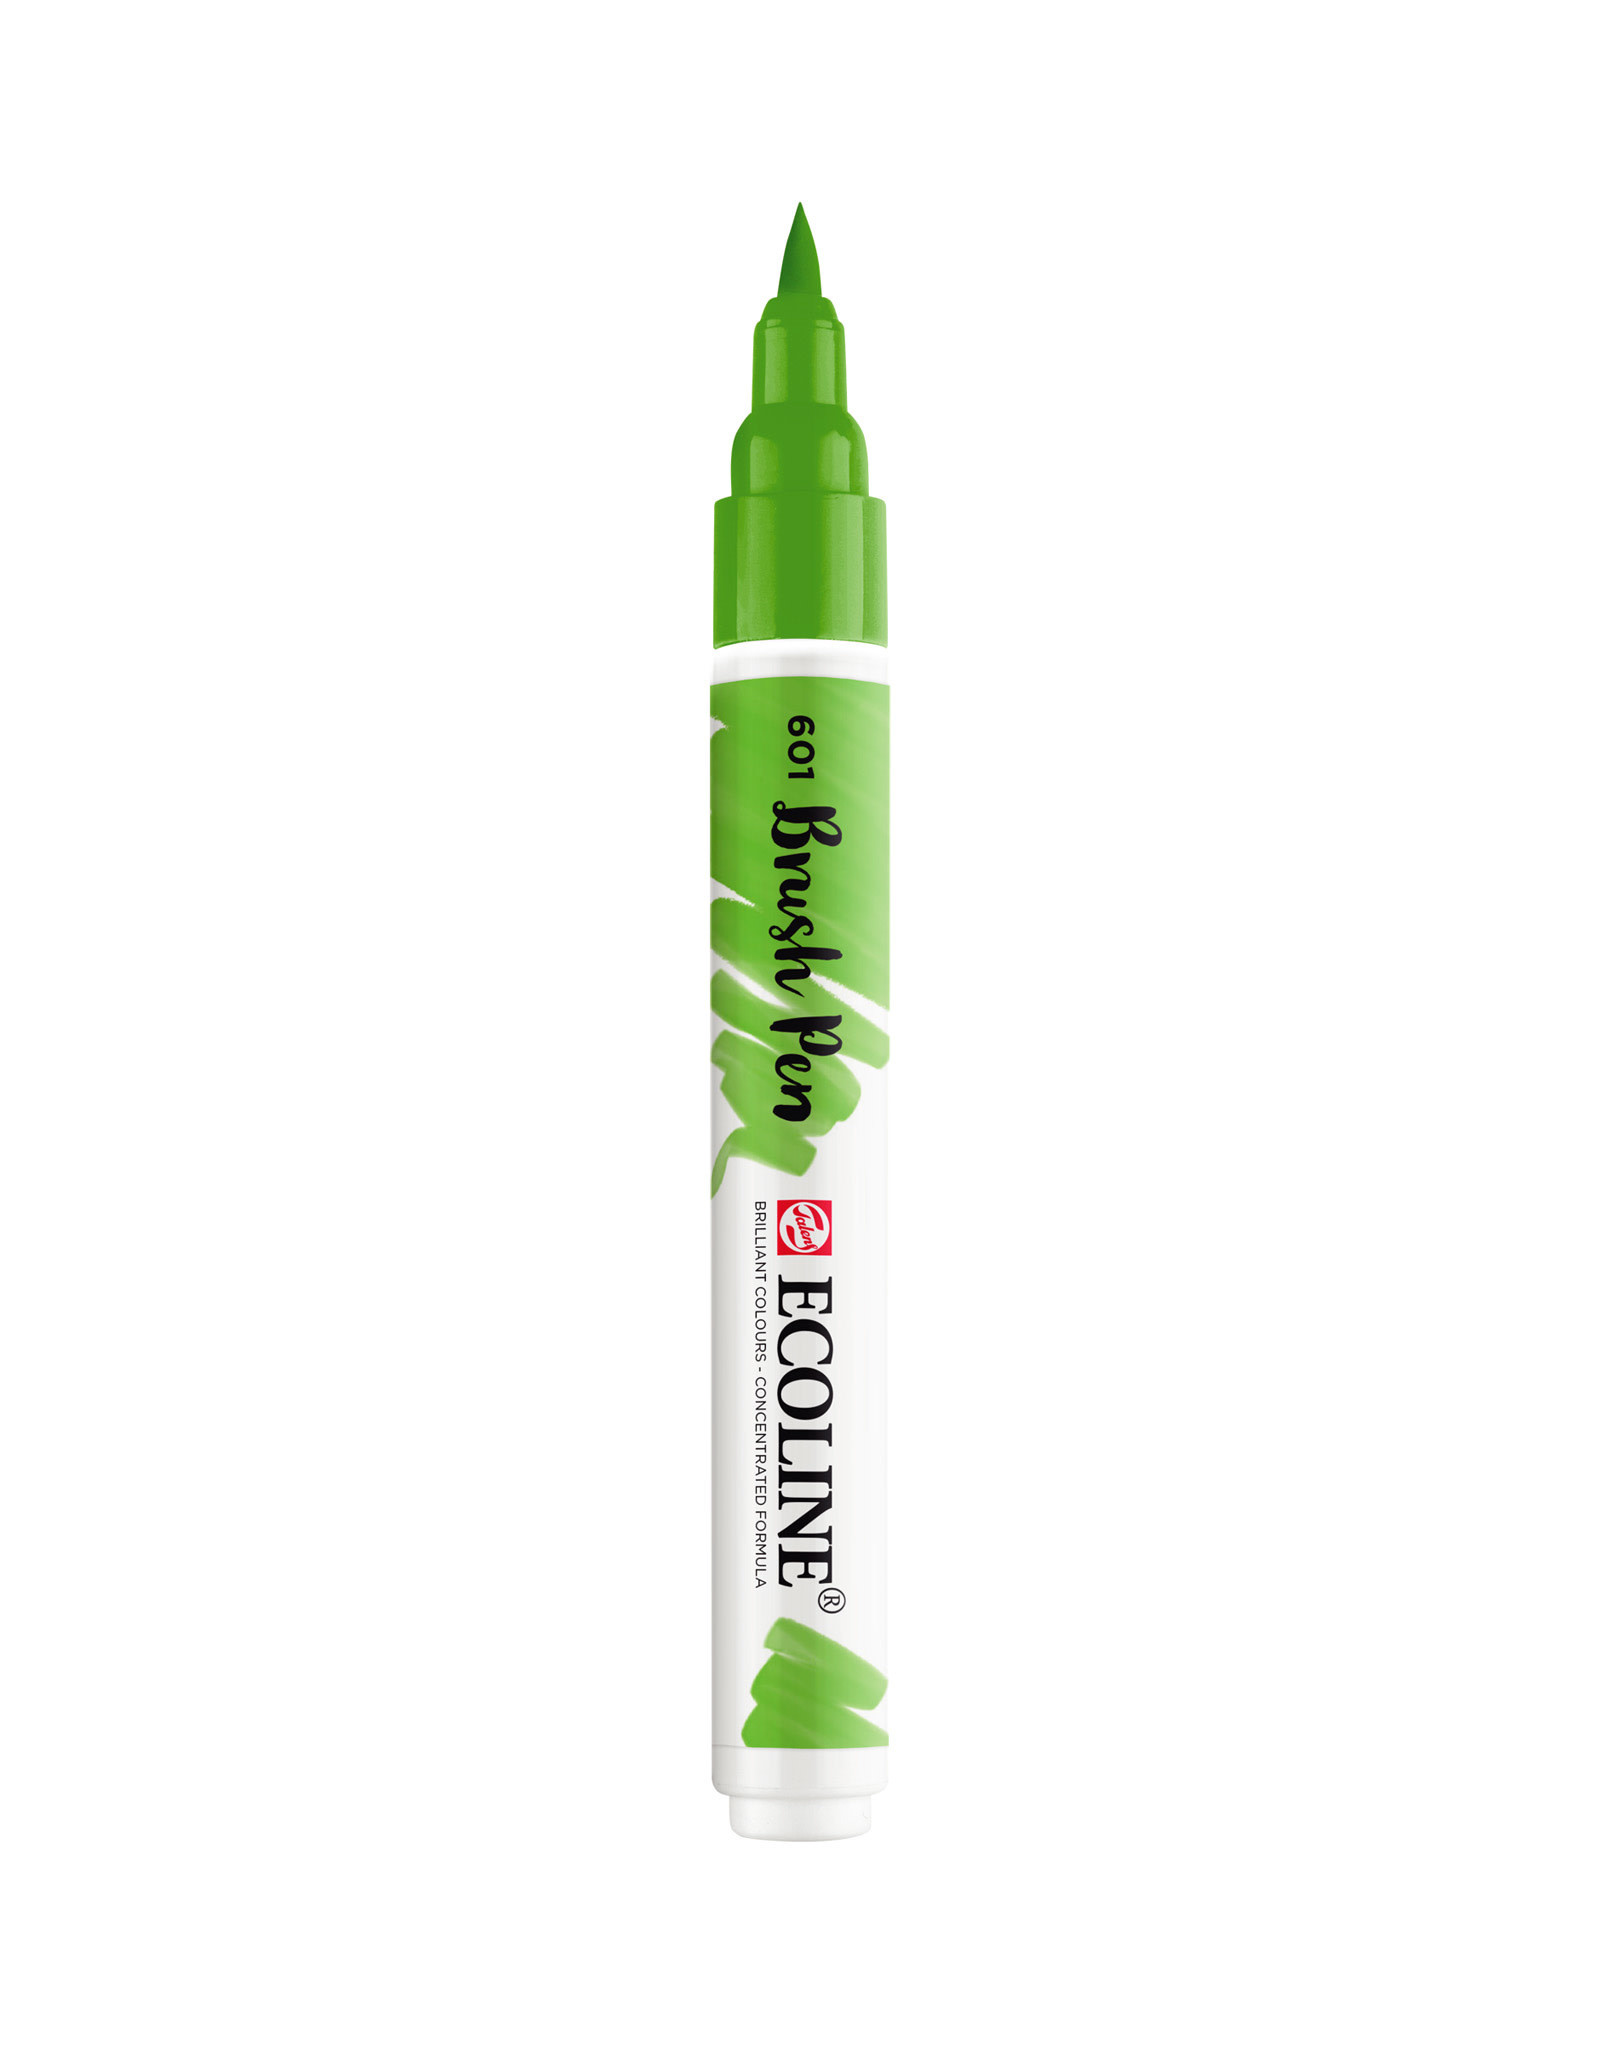 Royal Talens Ecoline Watercolour Brush Pen, Light Green